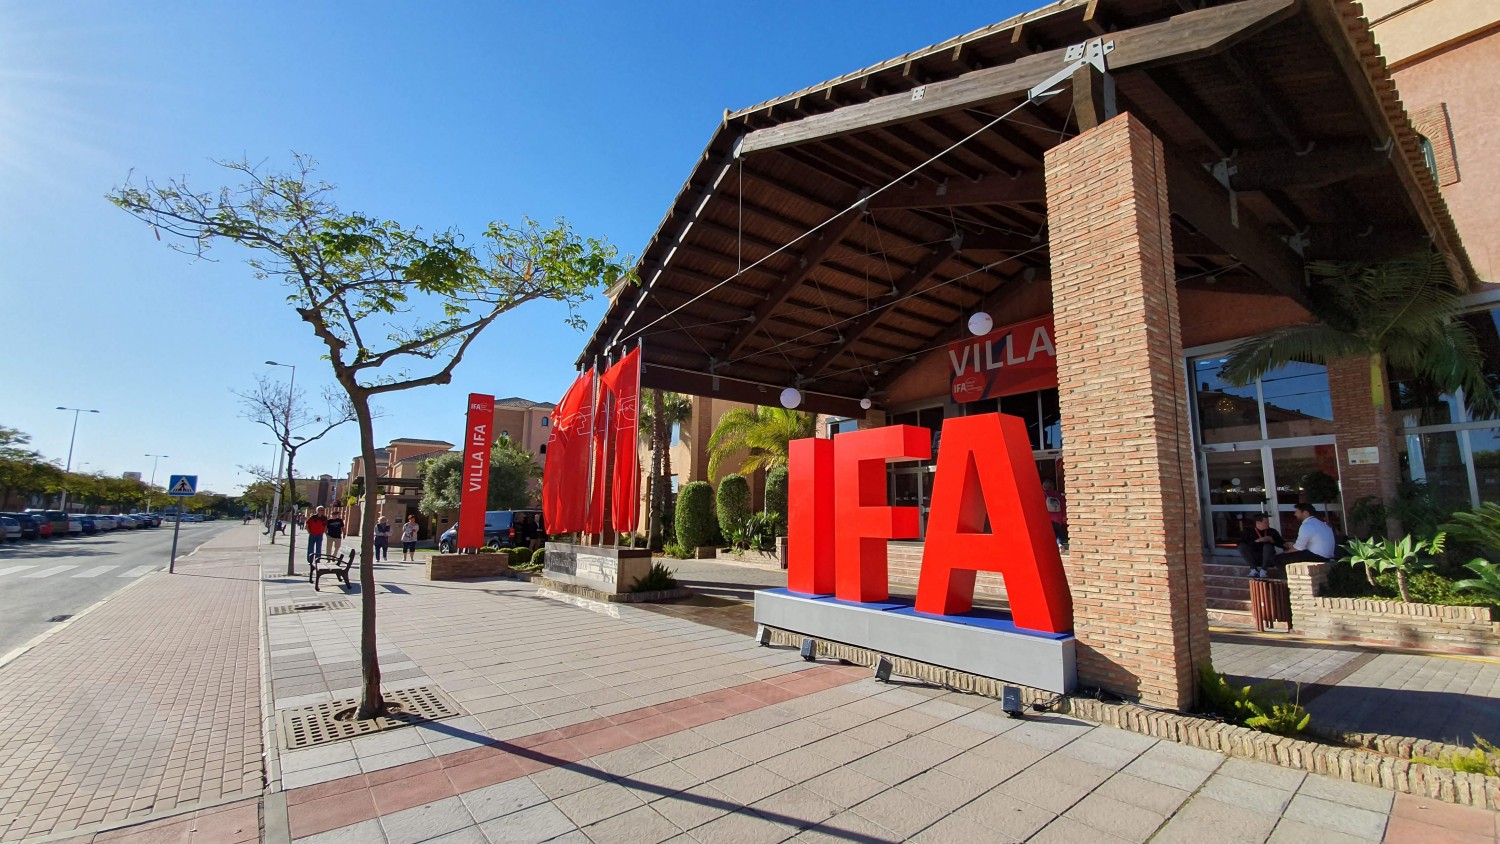 IFA Global Press Conference 2019: главные анонсы и планы на выставку